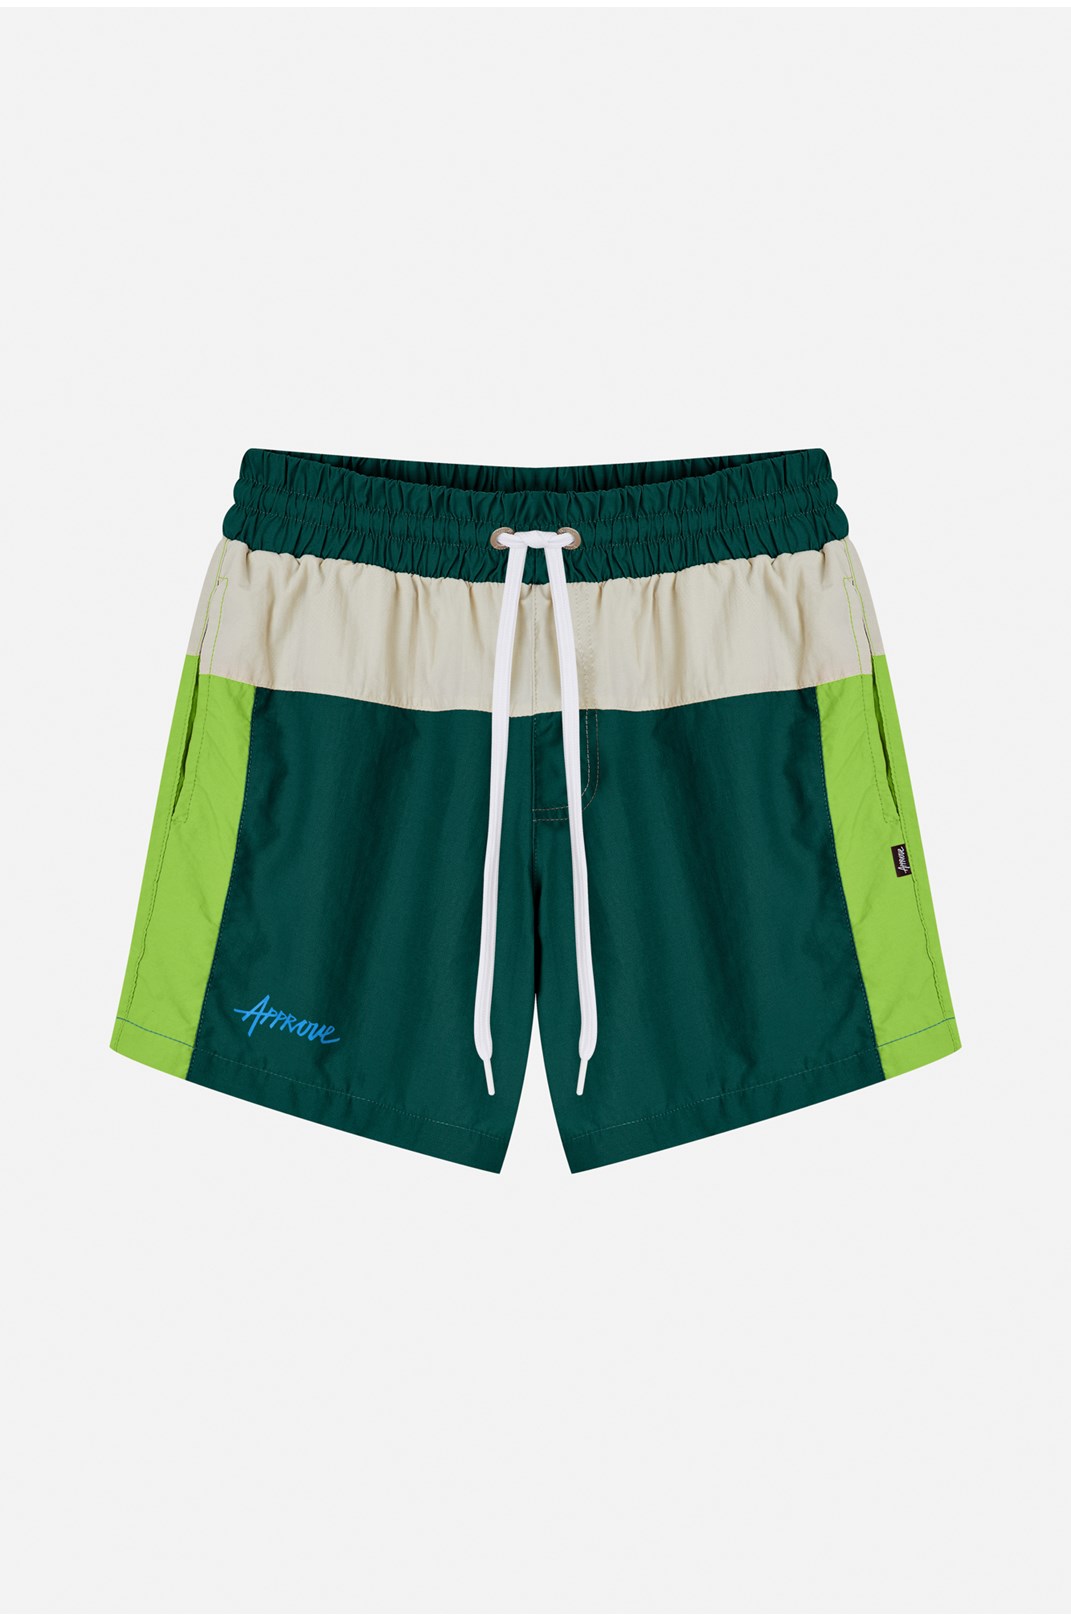 Shorts Approve Retropia Verde e Off White